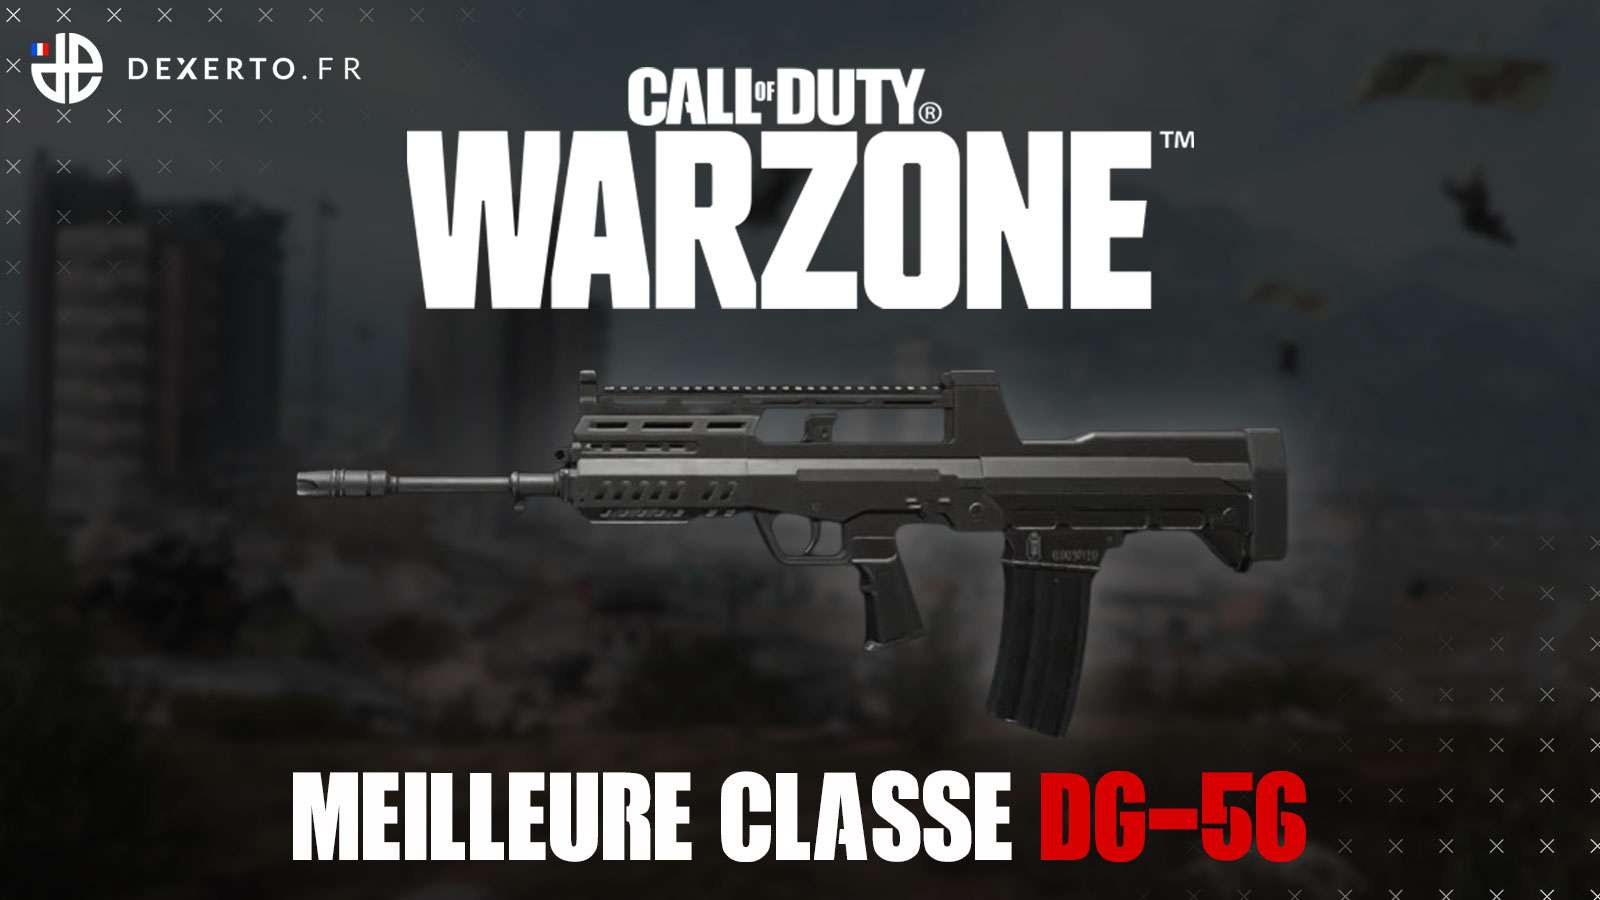 Warzone DG-56 classe